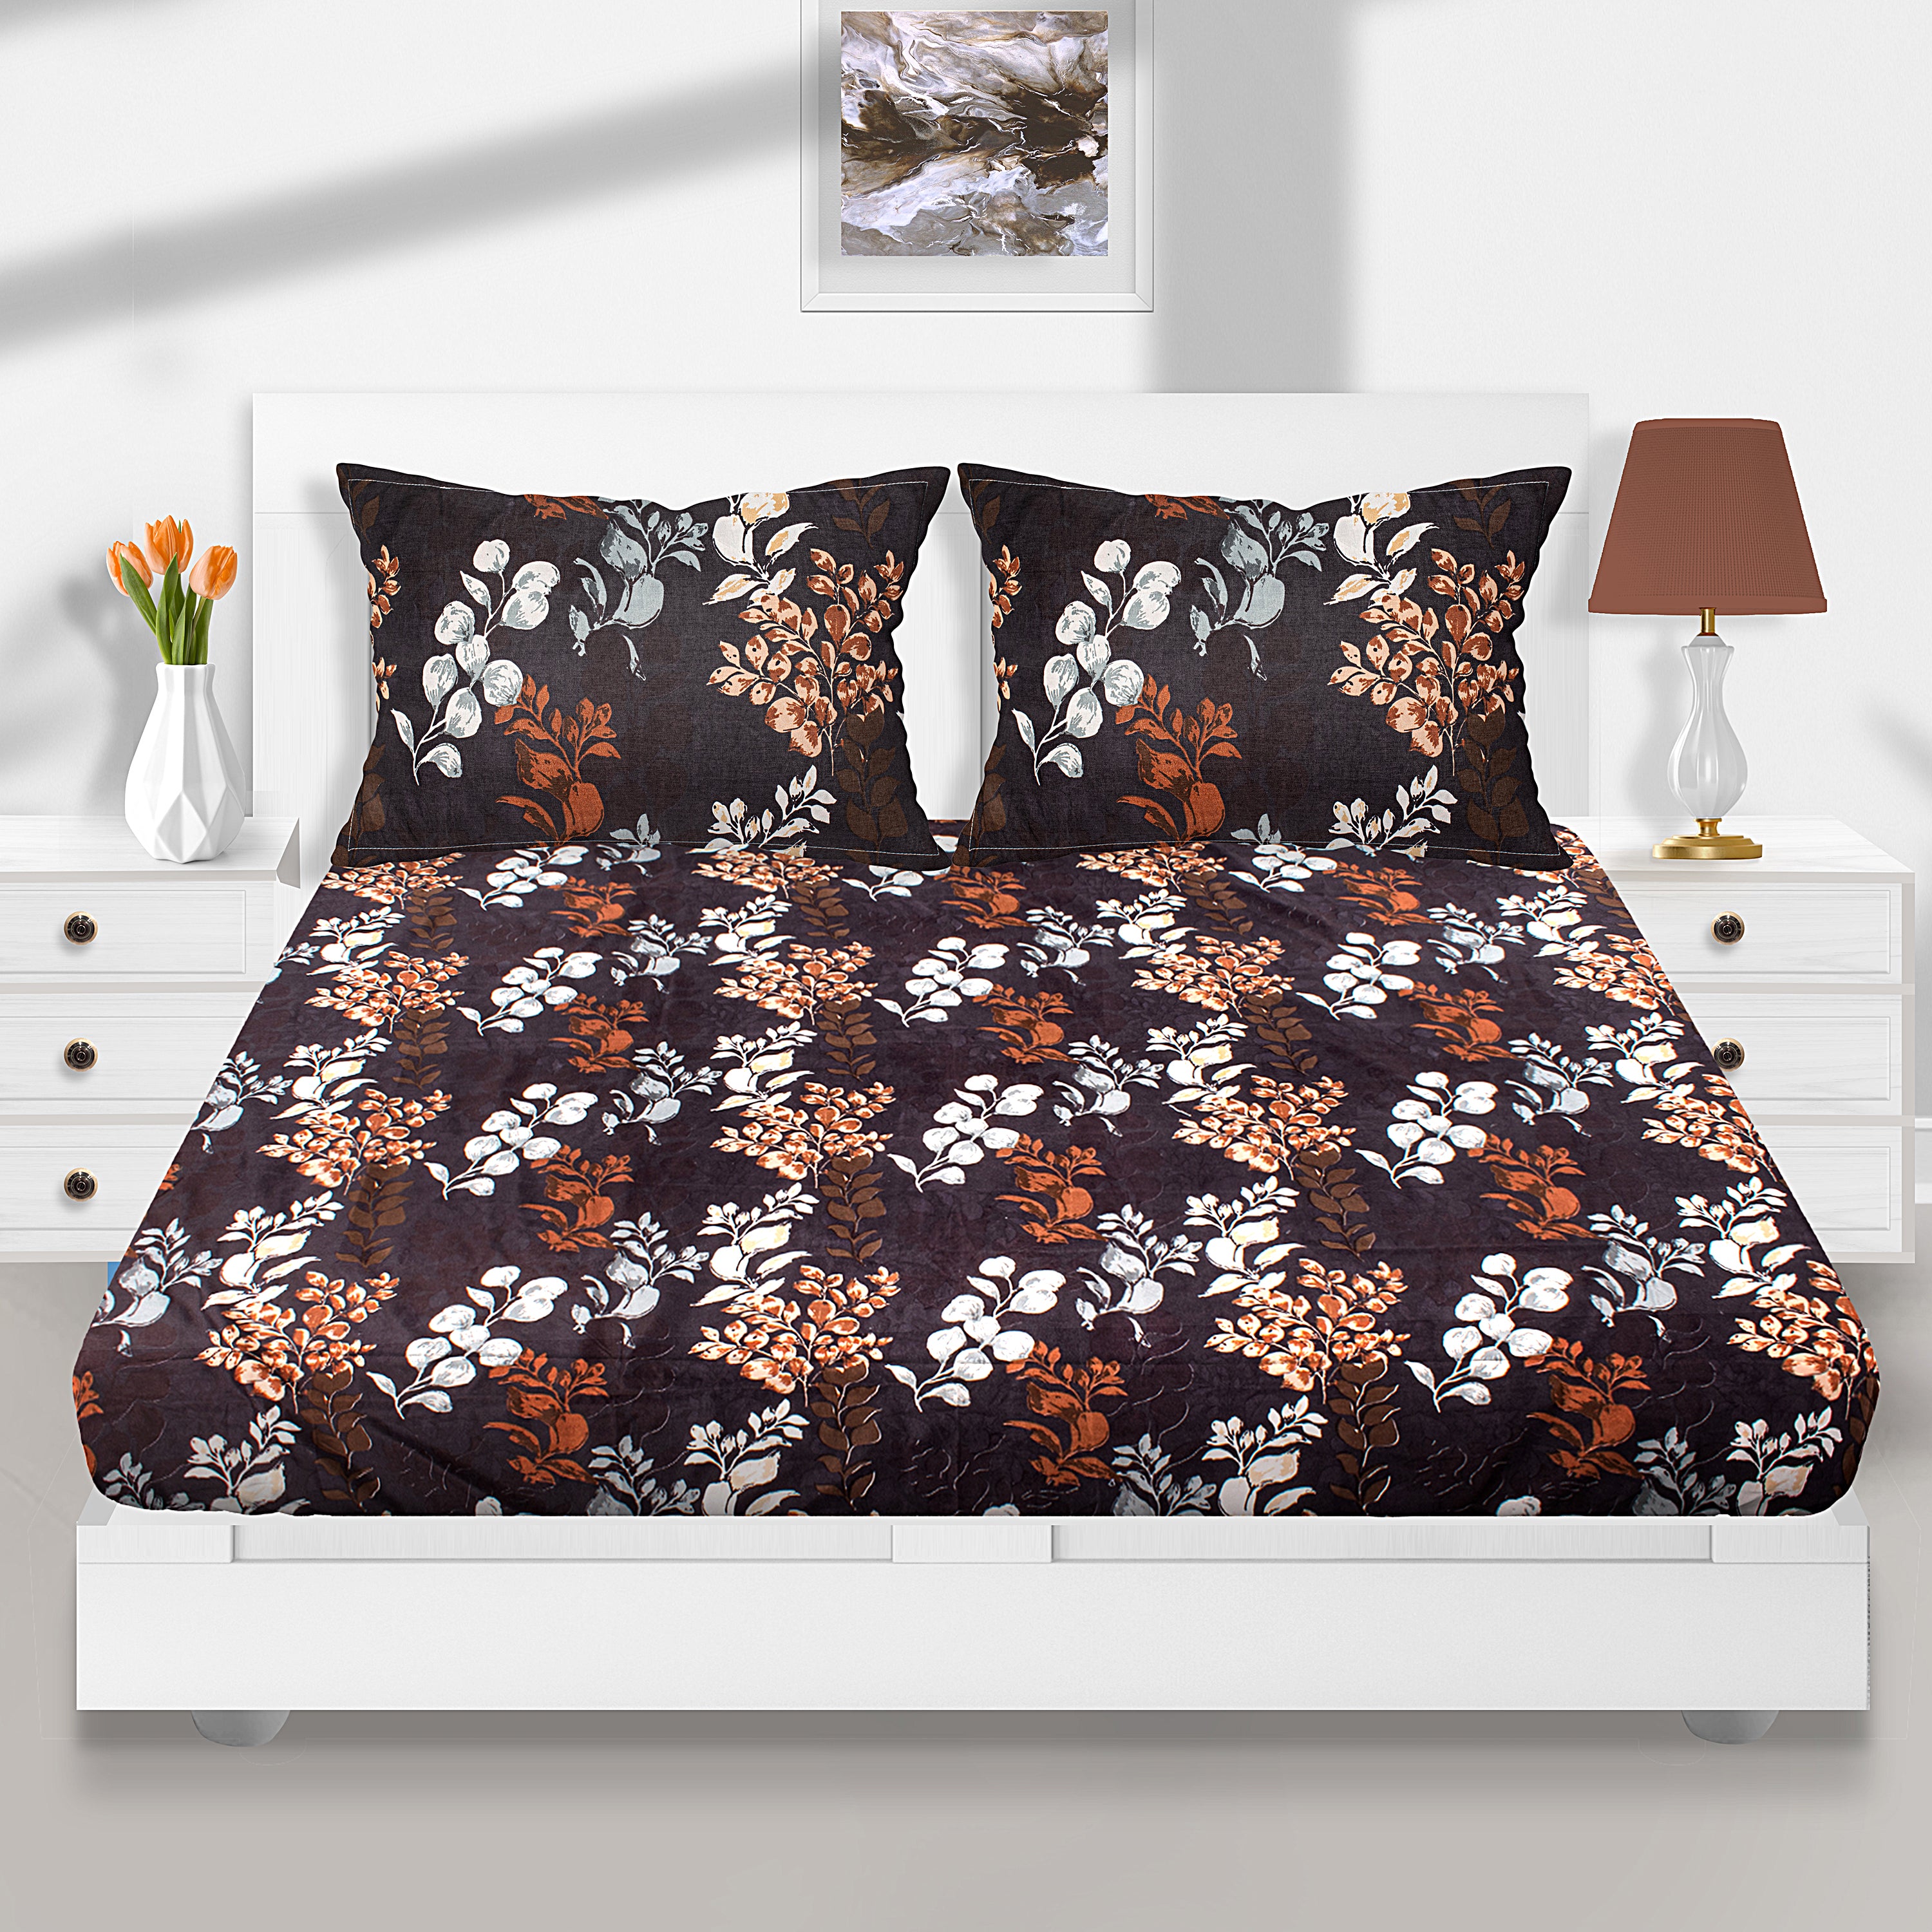 Utopia Bedding Duvet Cover Queen Size Set - 1 Duvet Cover with 2 Pillow  Shams 